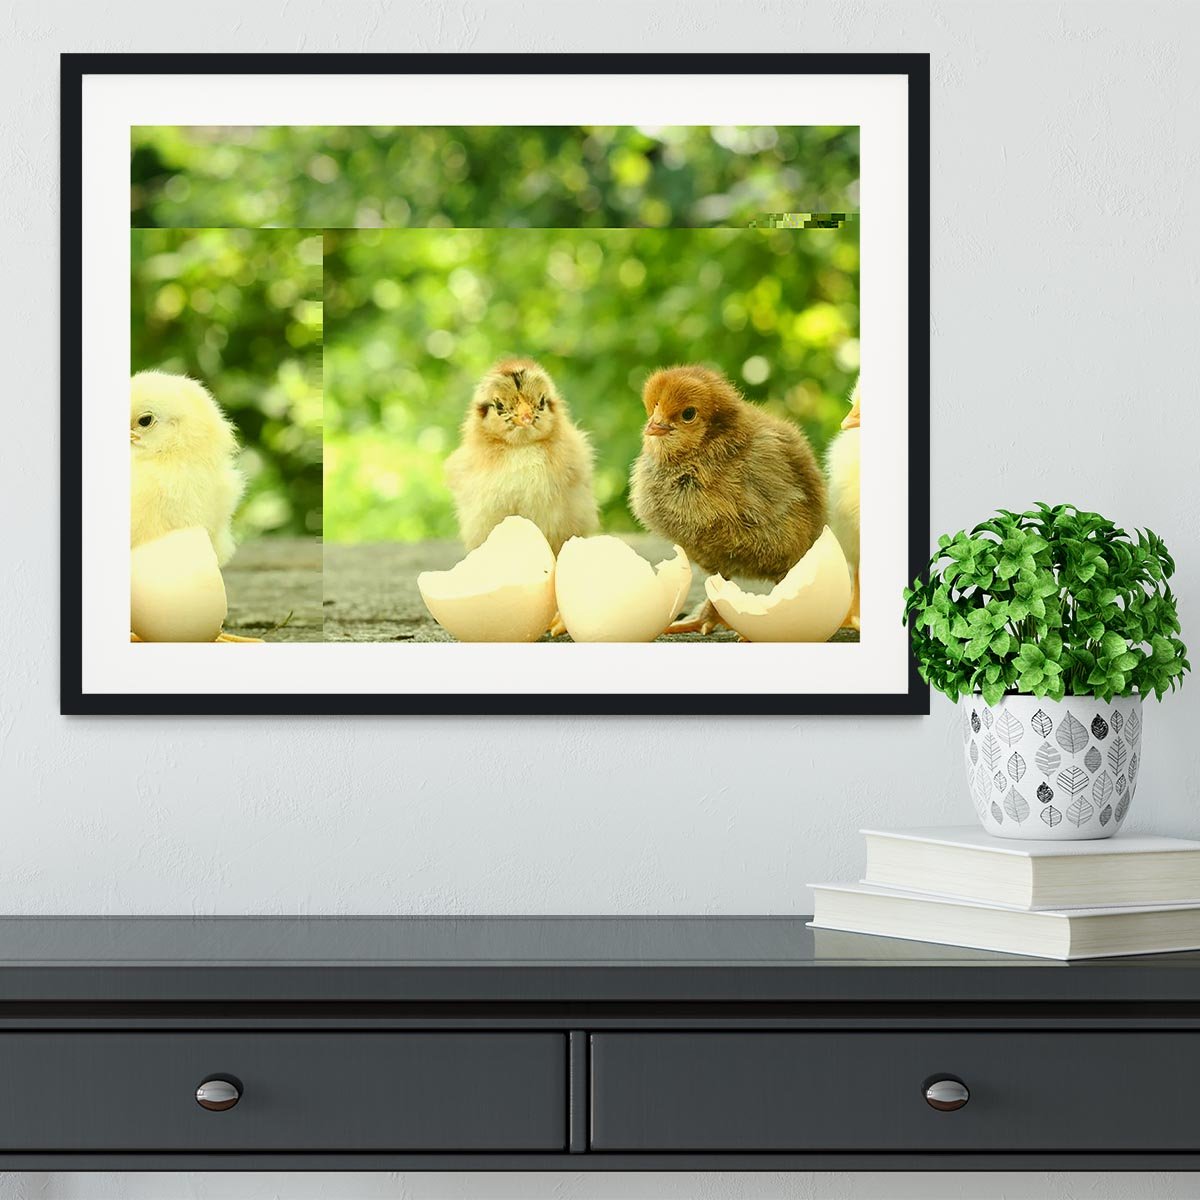 Small chicks and egg shells Framed Print - Canvas Art Rocks - 1